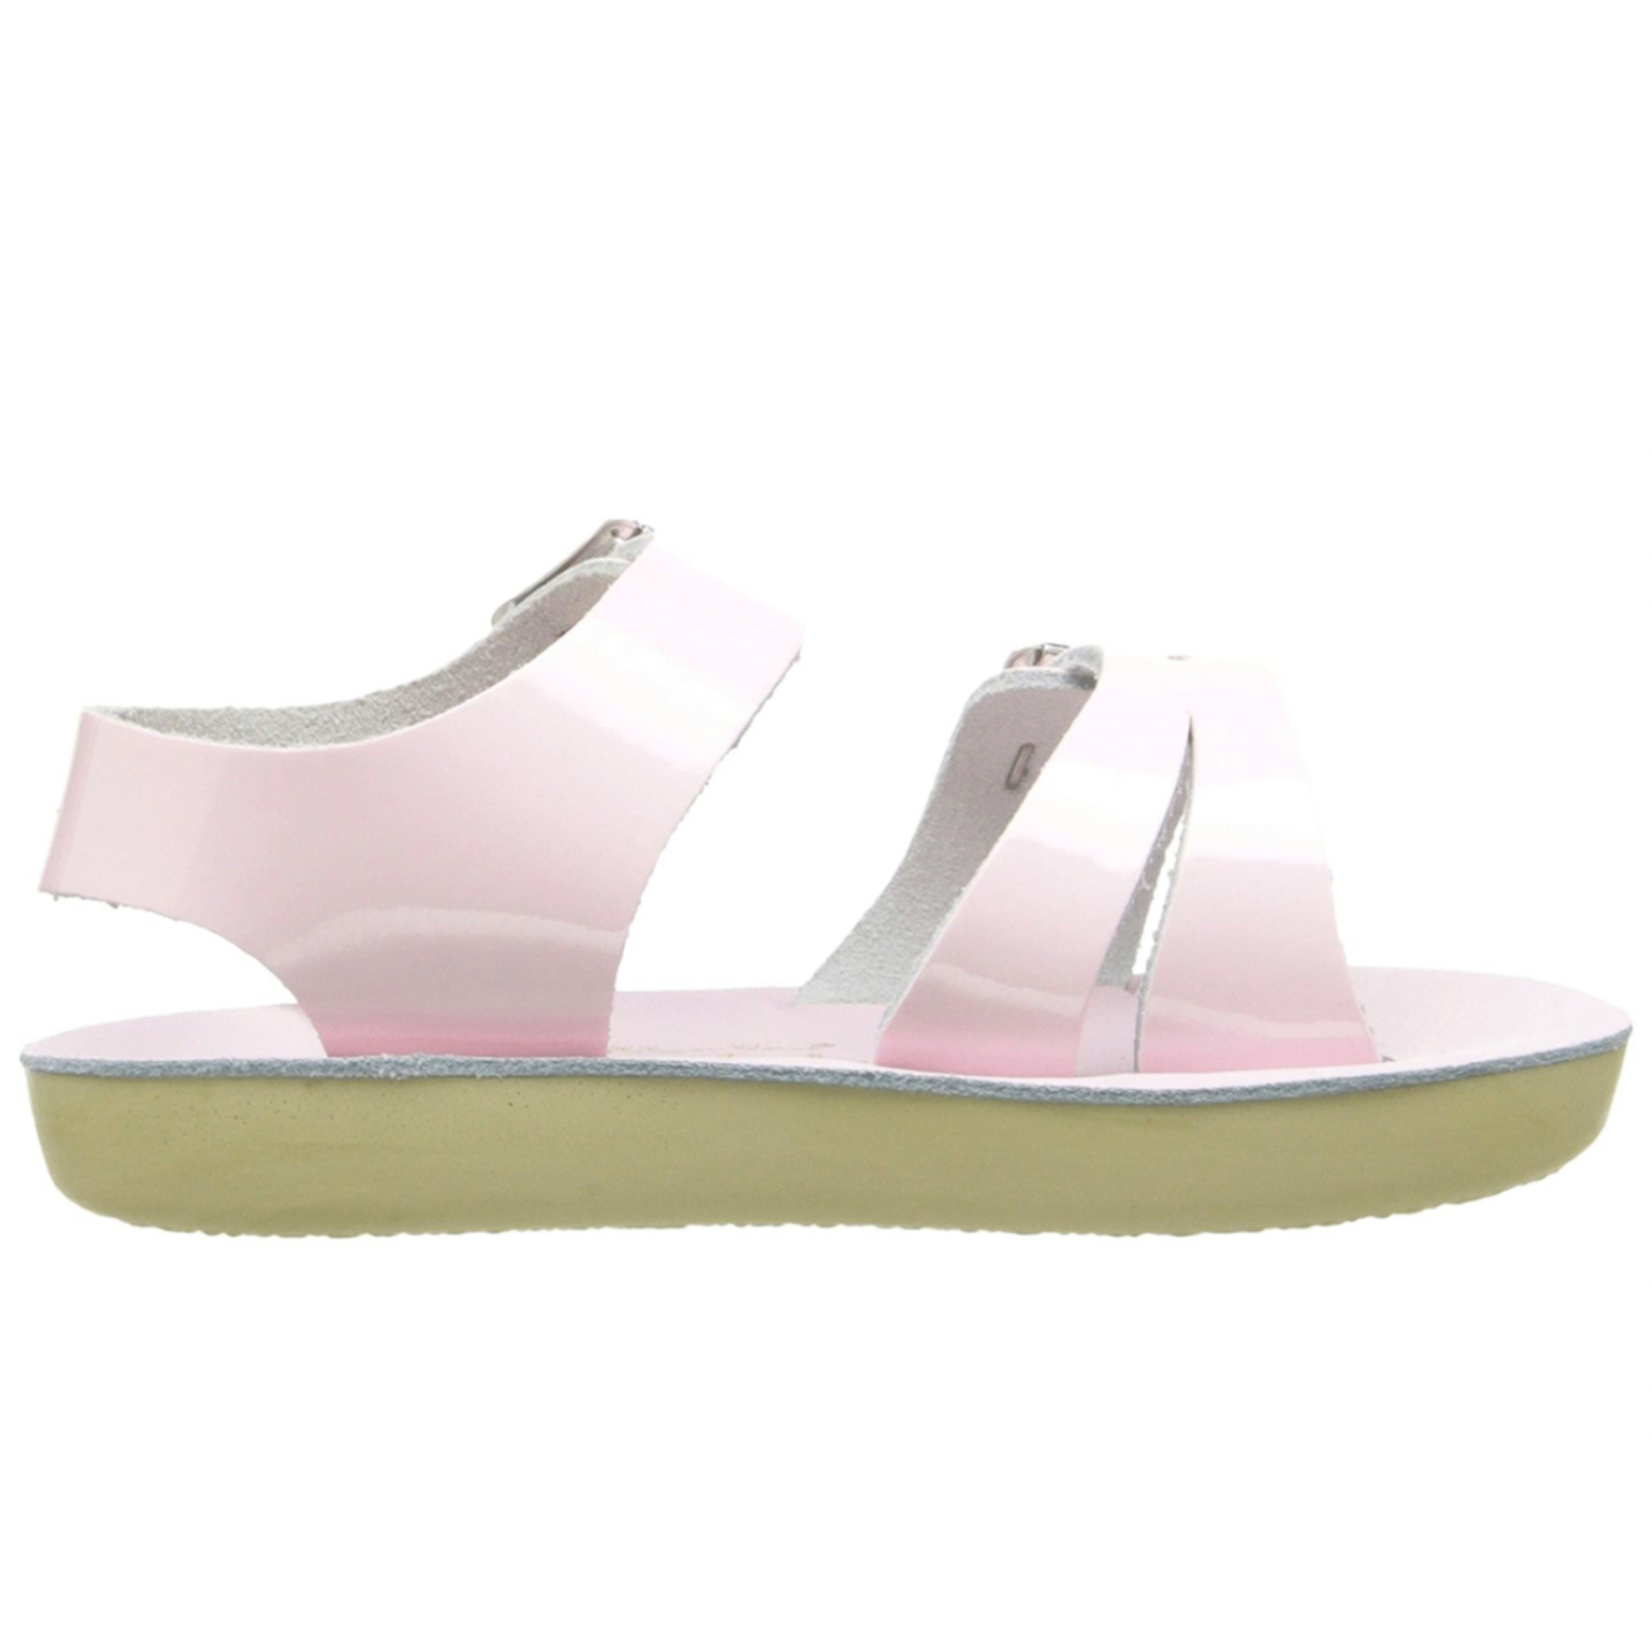 Sun-San Sandals Sea Wee Sandals (Baby, Pink)